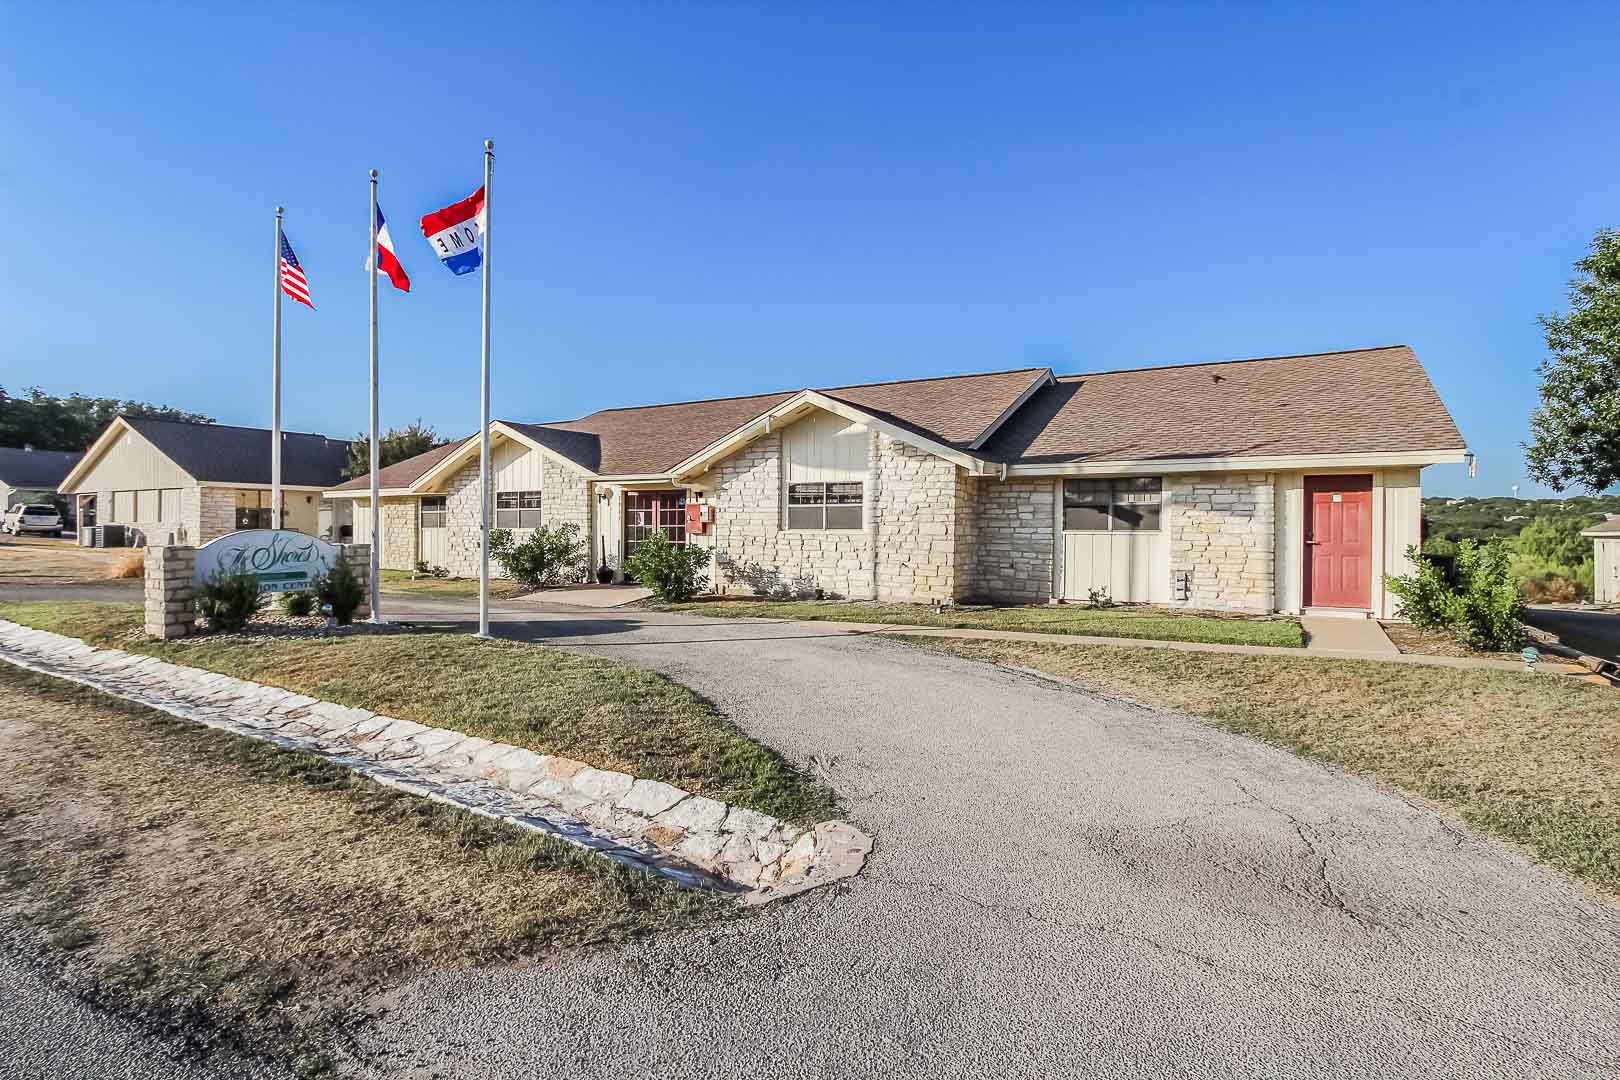 A welcoming resort entrance at VRI's Vacation Village at Lake Travis in Texas.